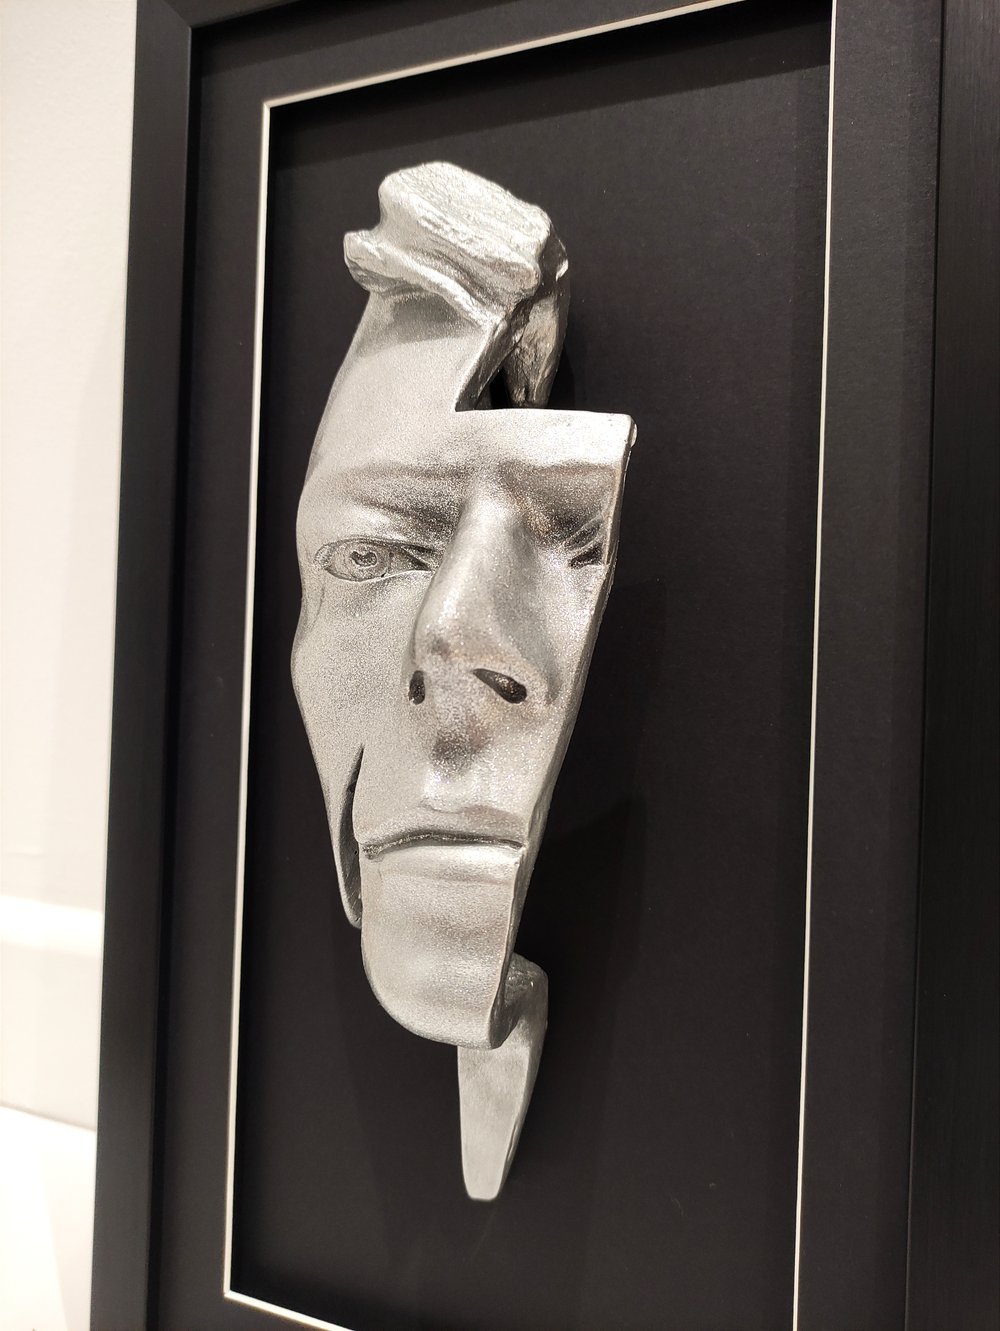 Glitter Gold/Silver Resin 'Flash' Metallic Effect - David Bowie Sculpture